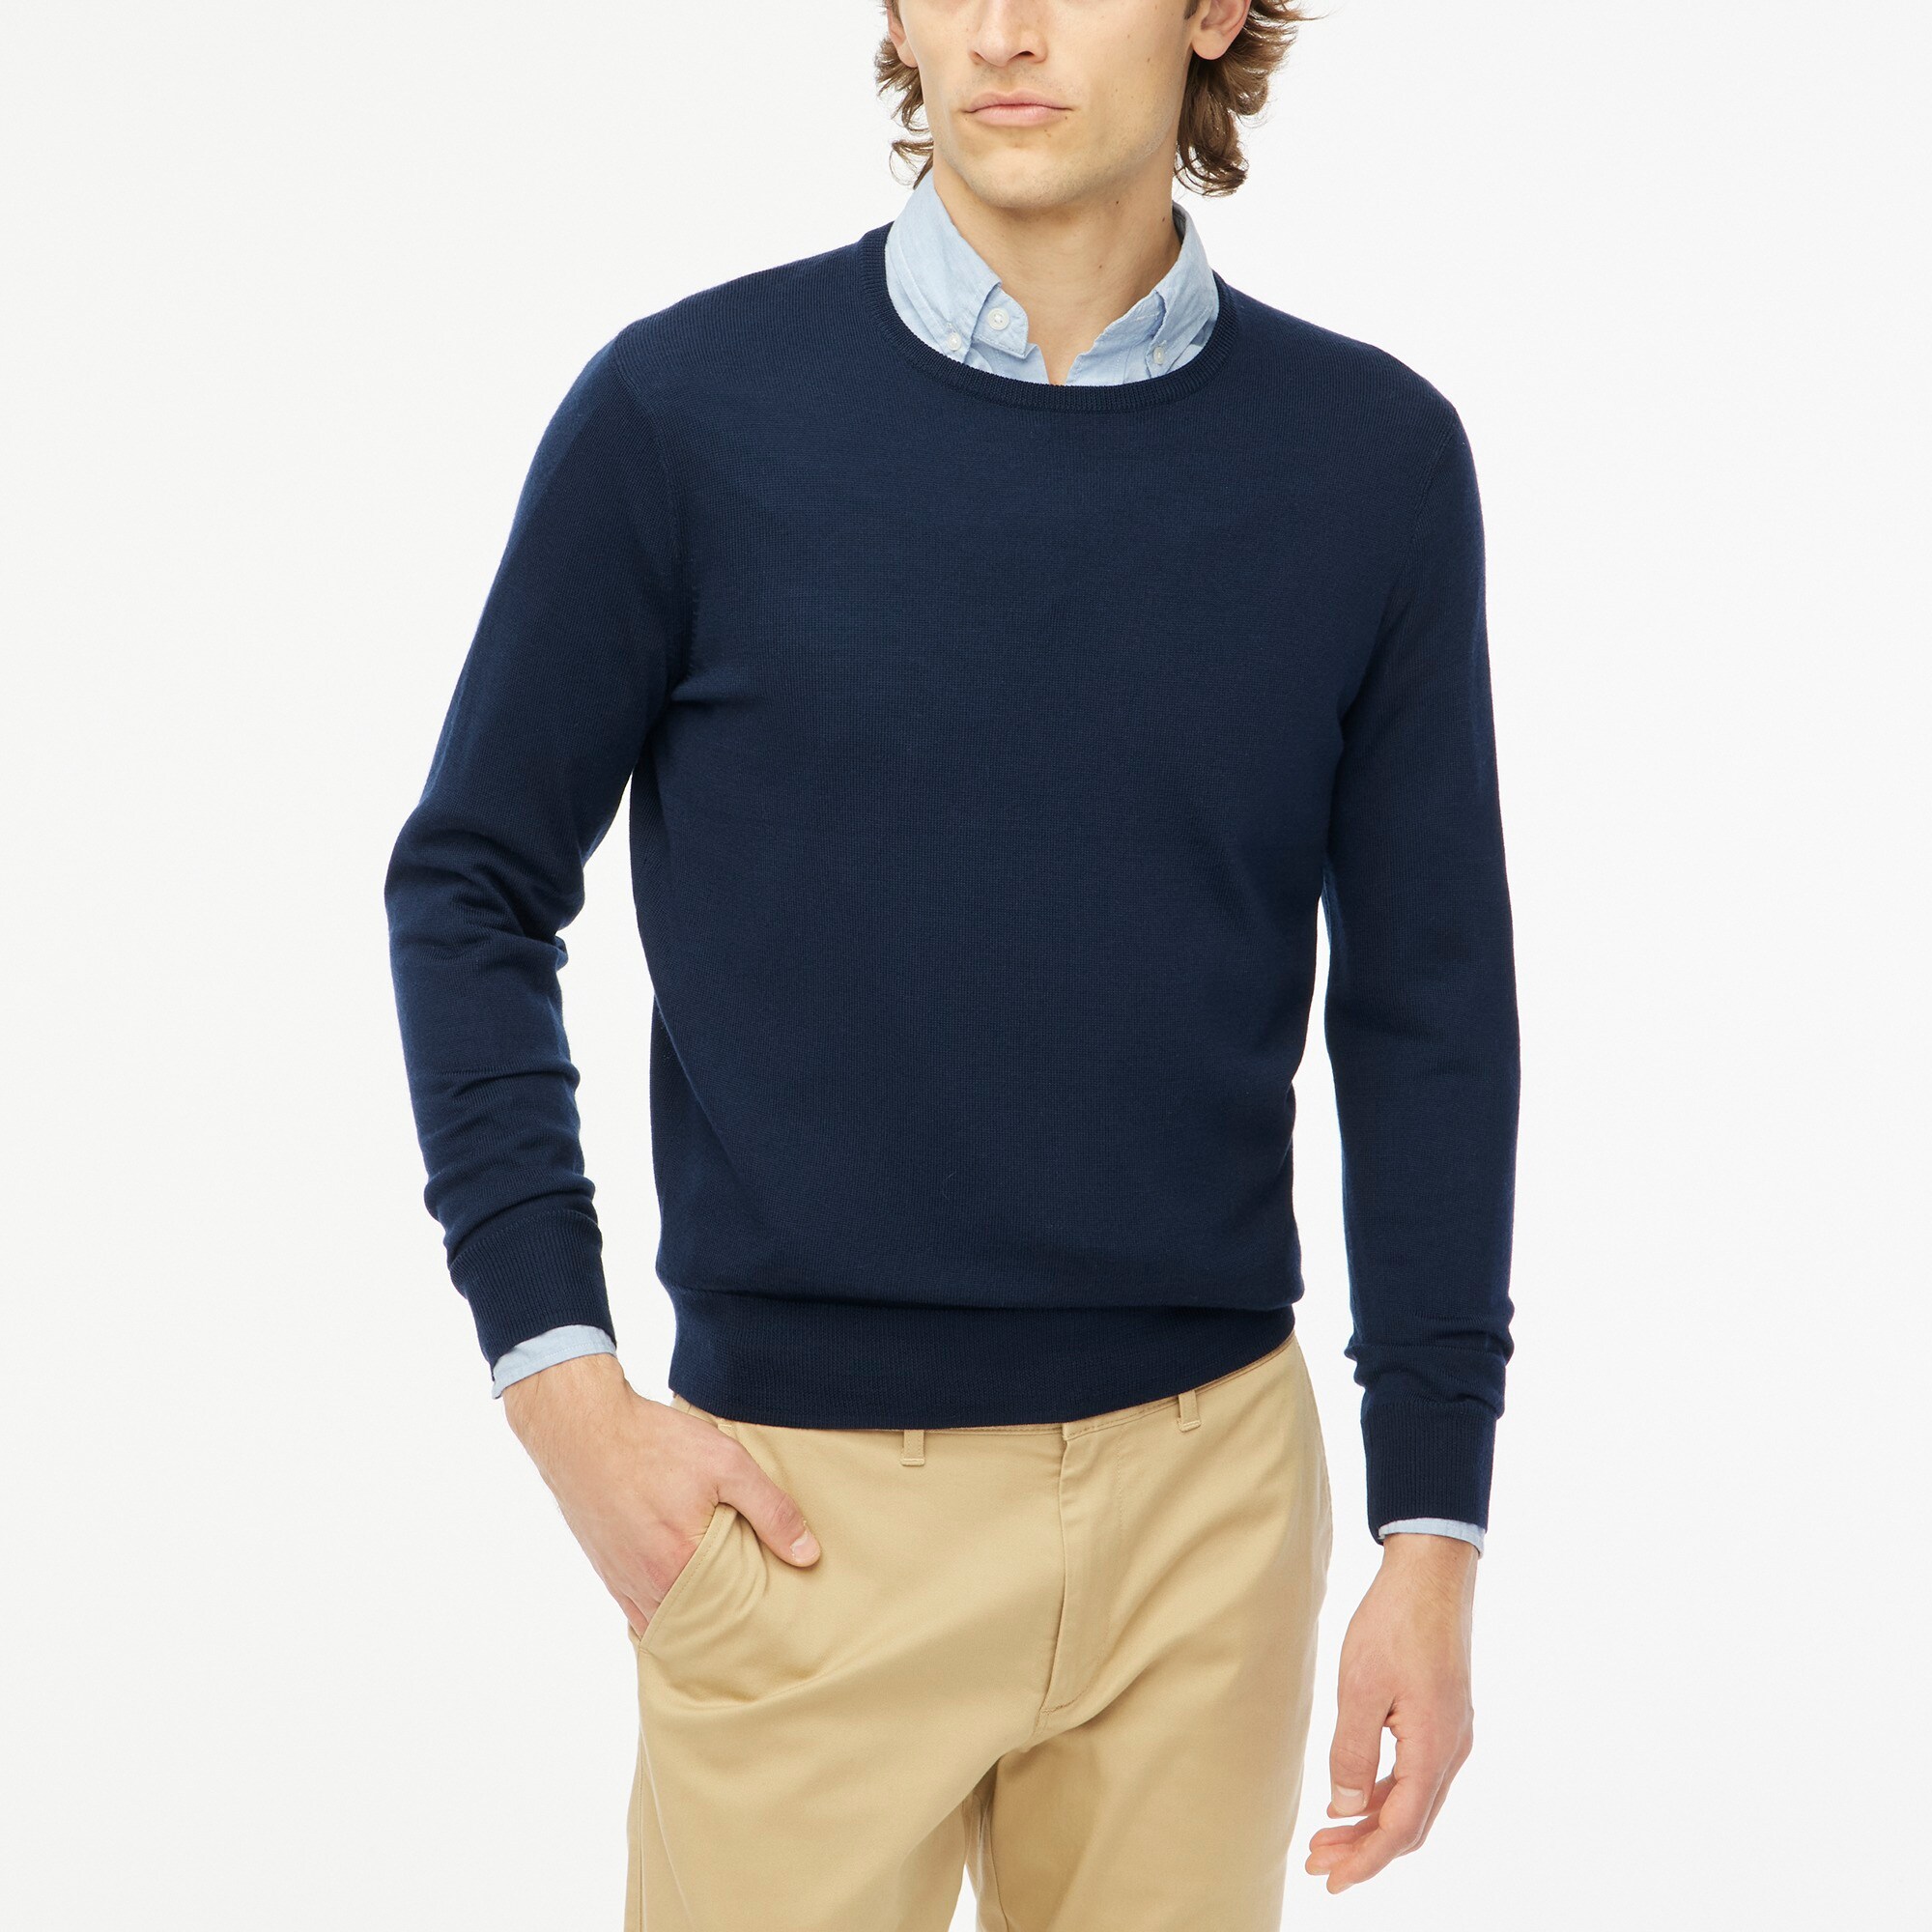 Ramblers Way Men's Jacquard Crew Neck Wool Sweater